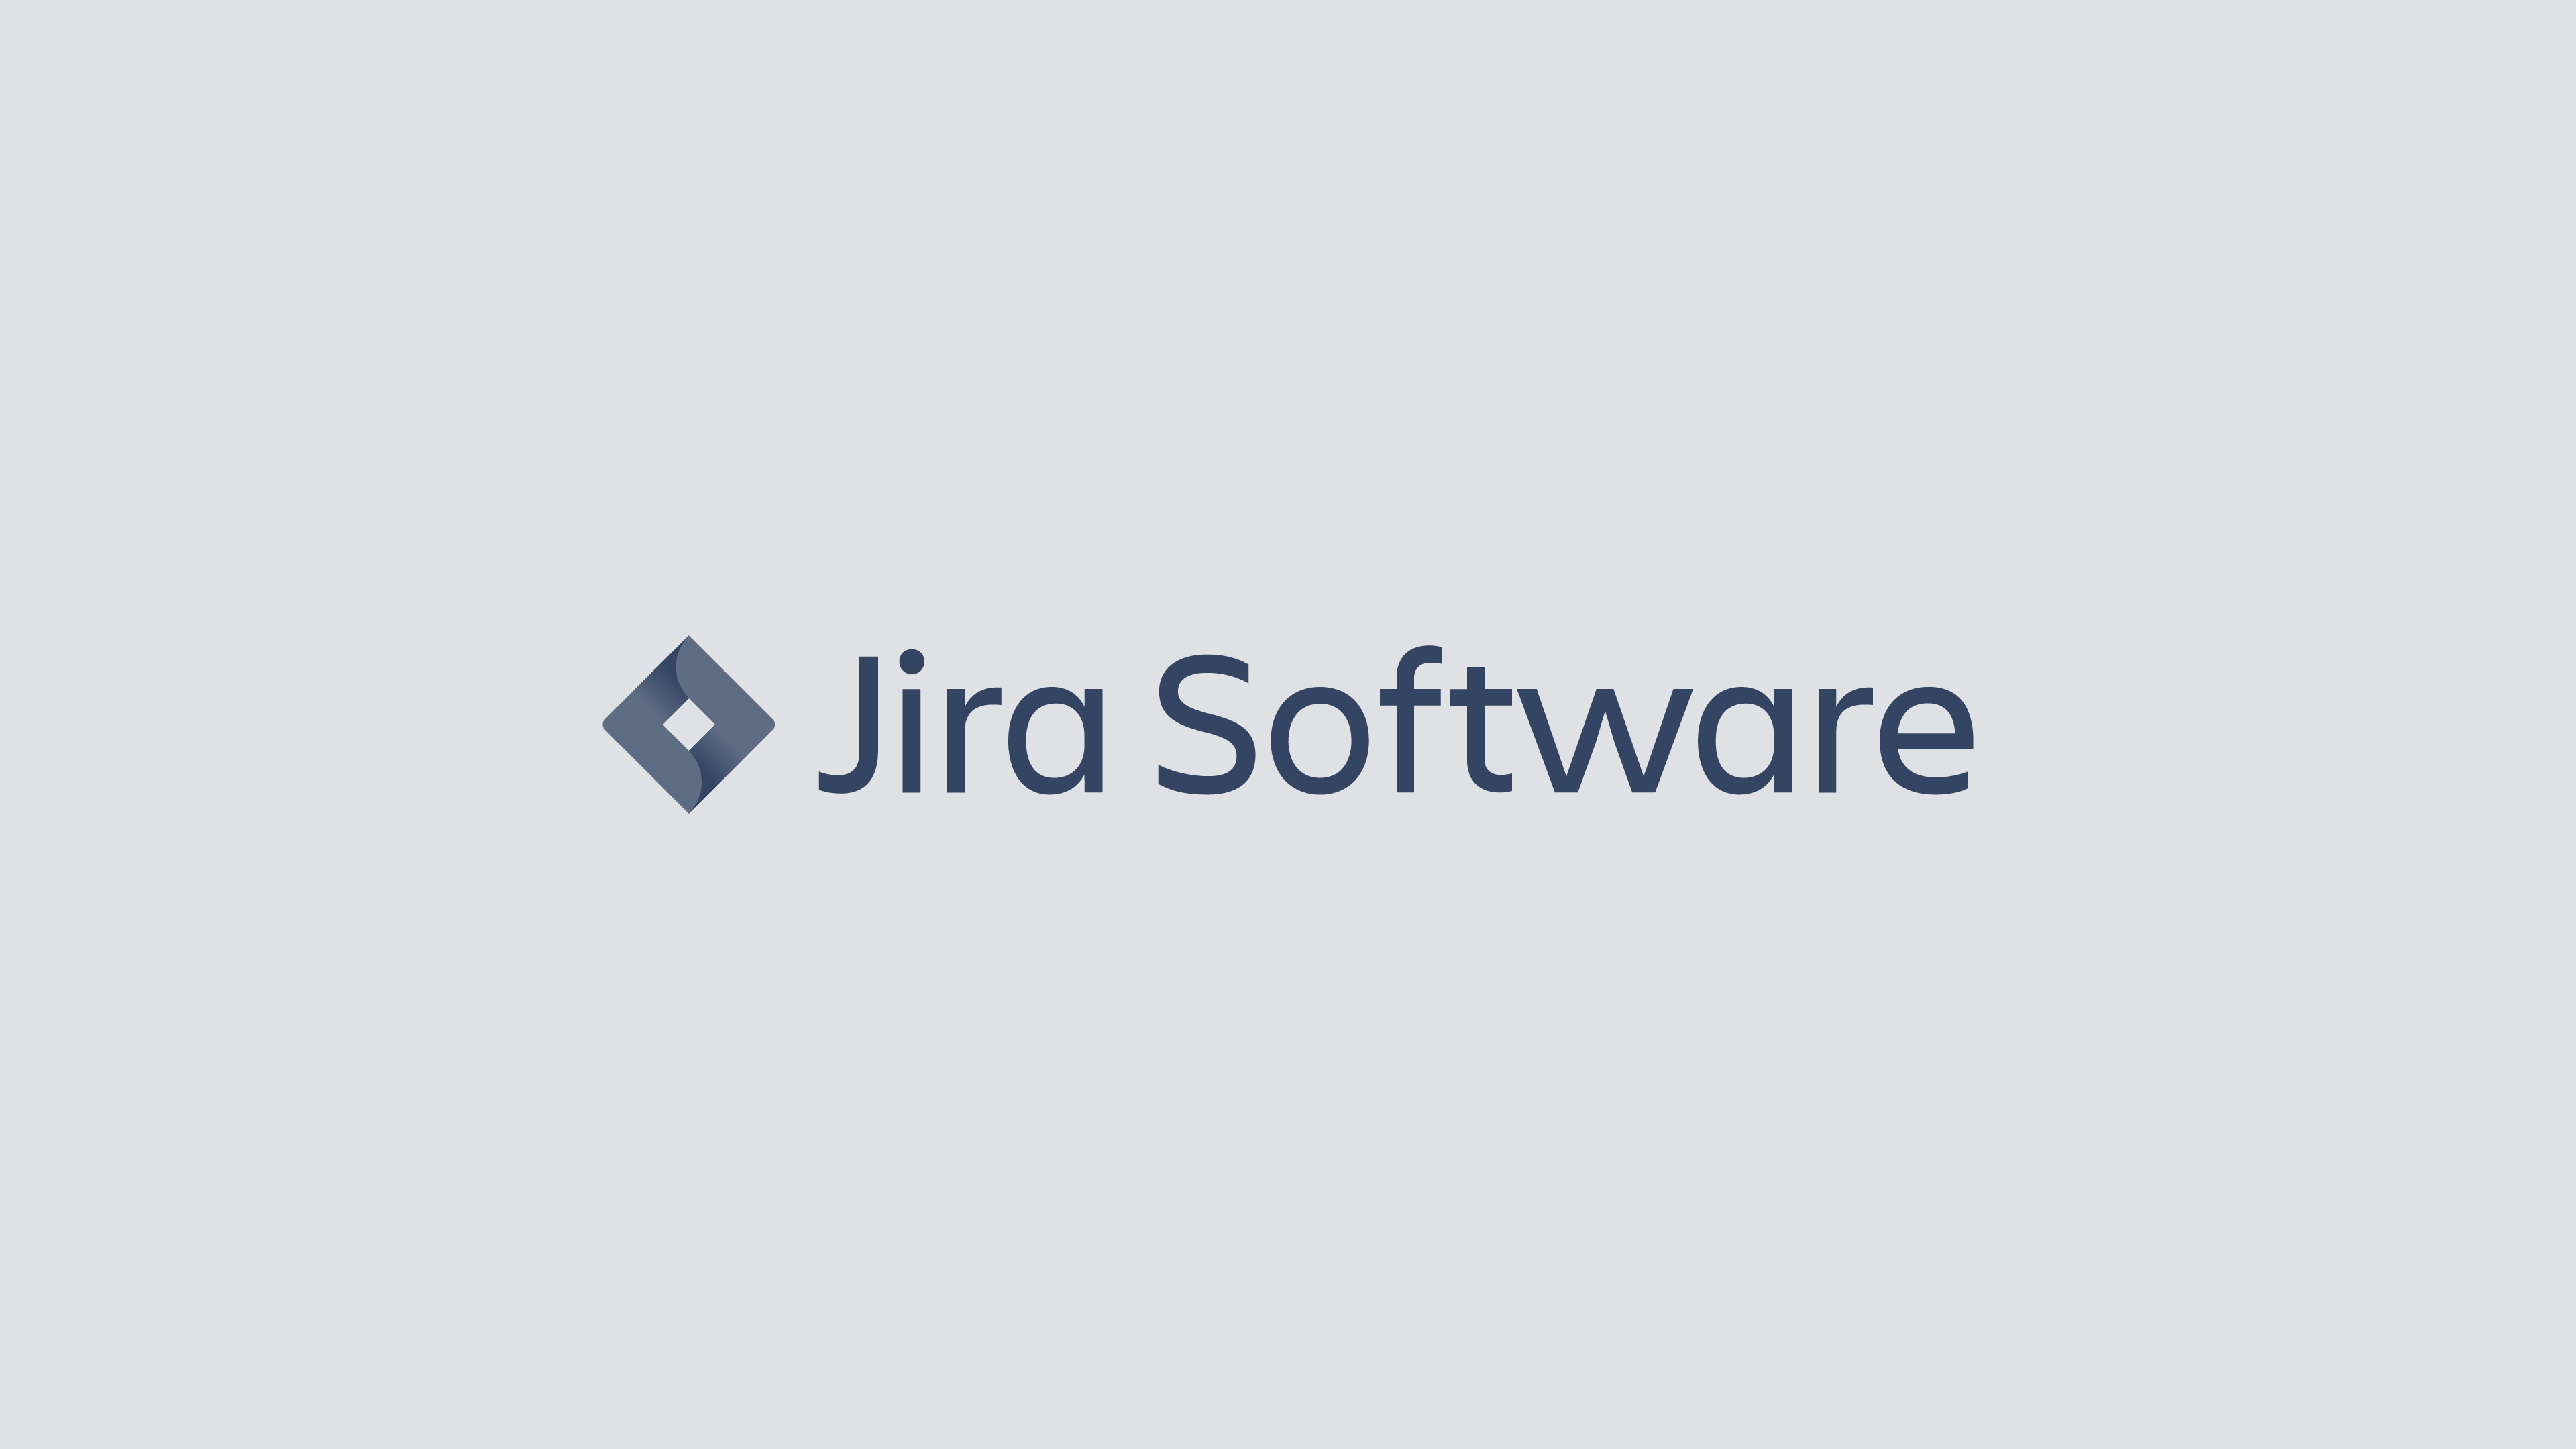 jira software grey logo.